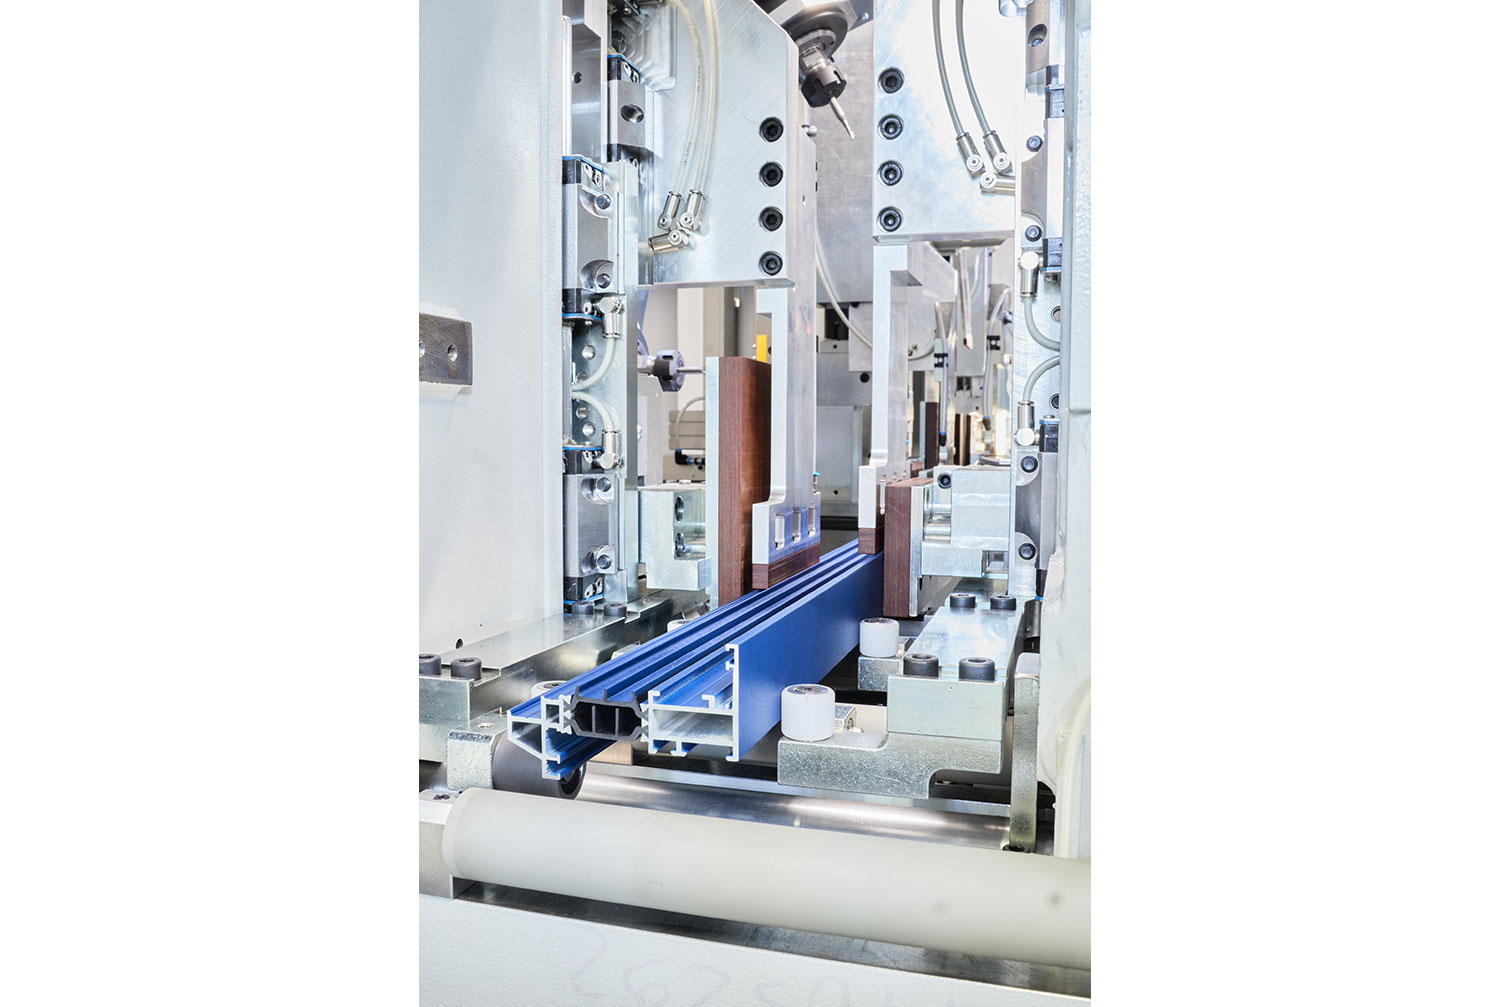 aluminum profile fabrication centre Schirmer clamps